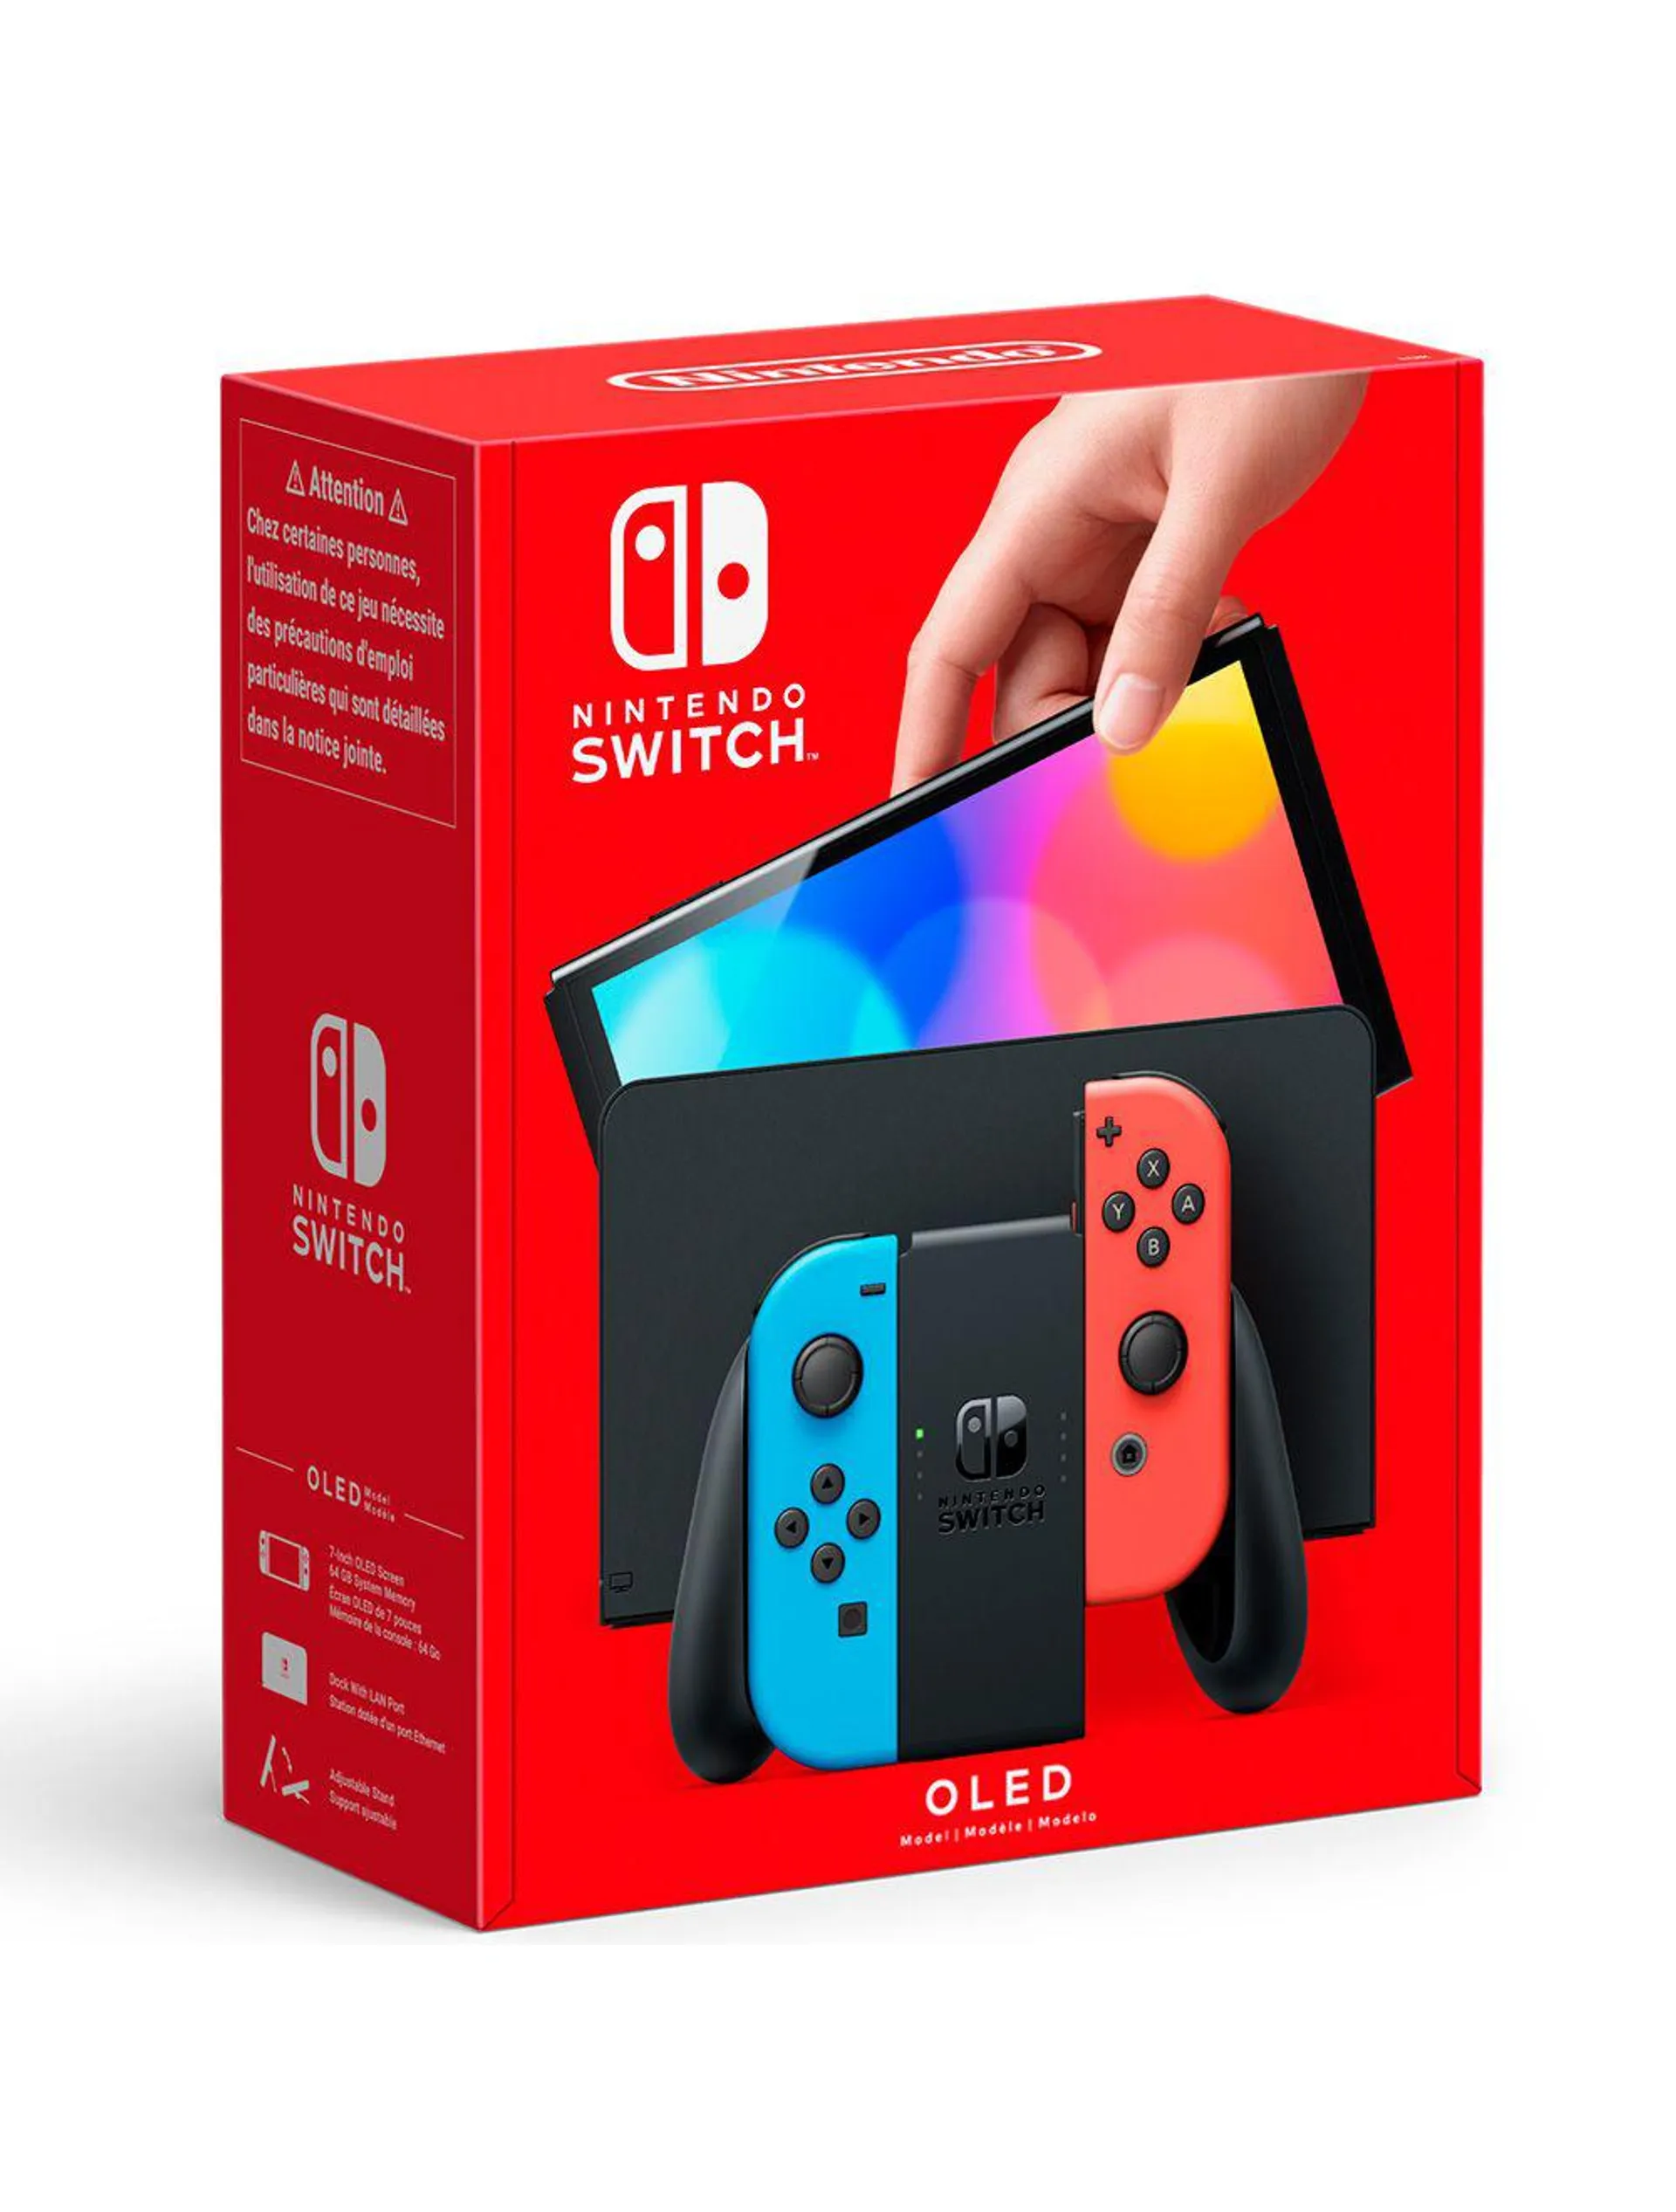 Consola Nintendo Switch – Modelo OLED (Neon)